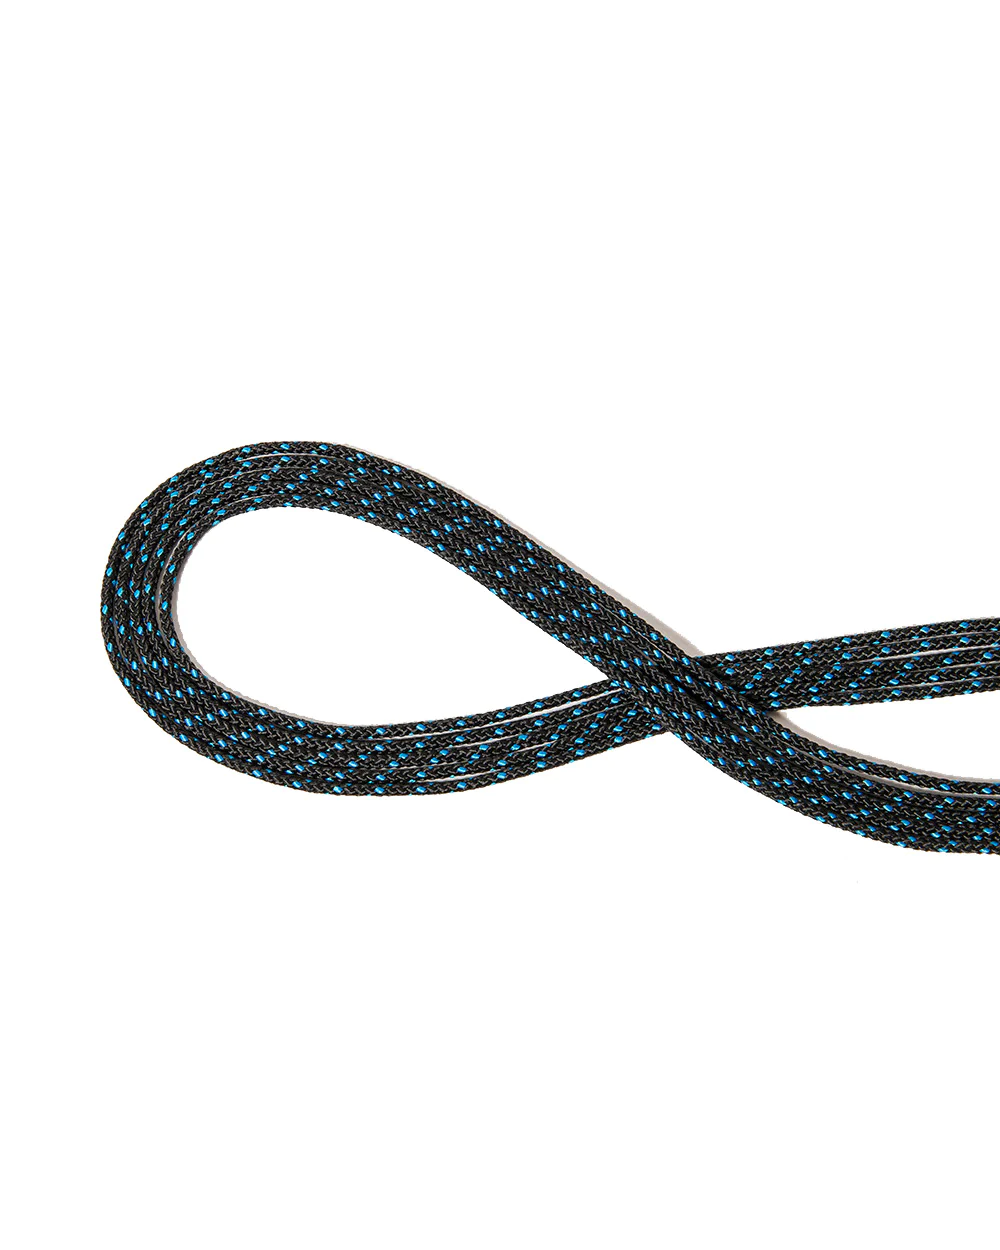 Rope Black/Blue Polyester 5/32" (4mm) Downhaul Line 1ft Precut